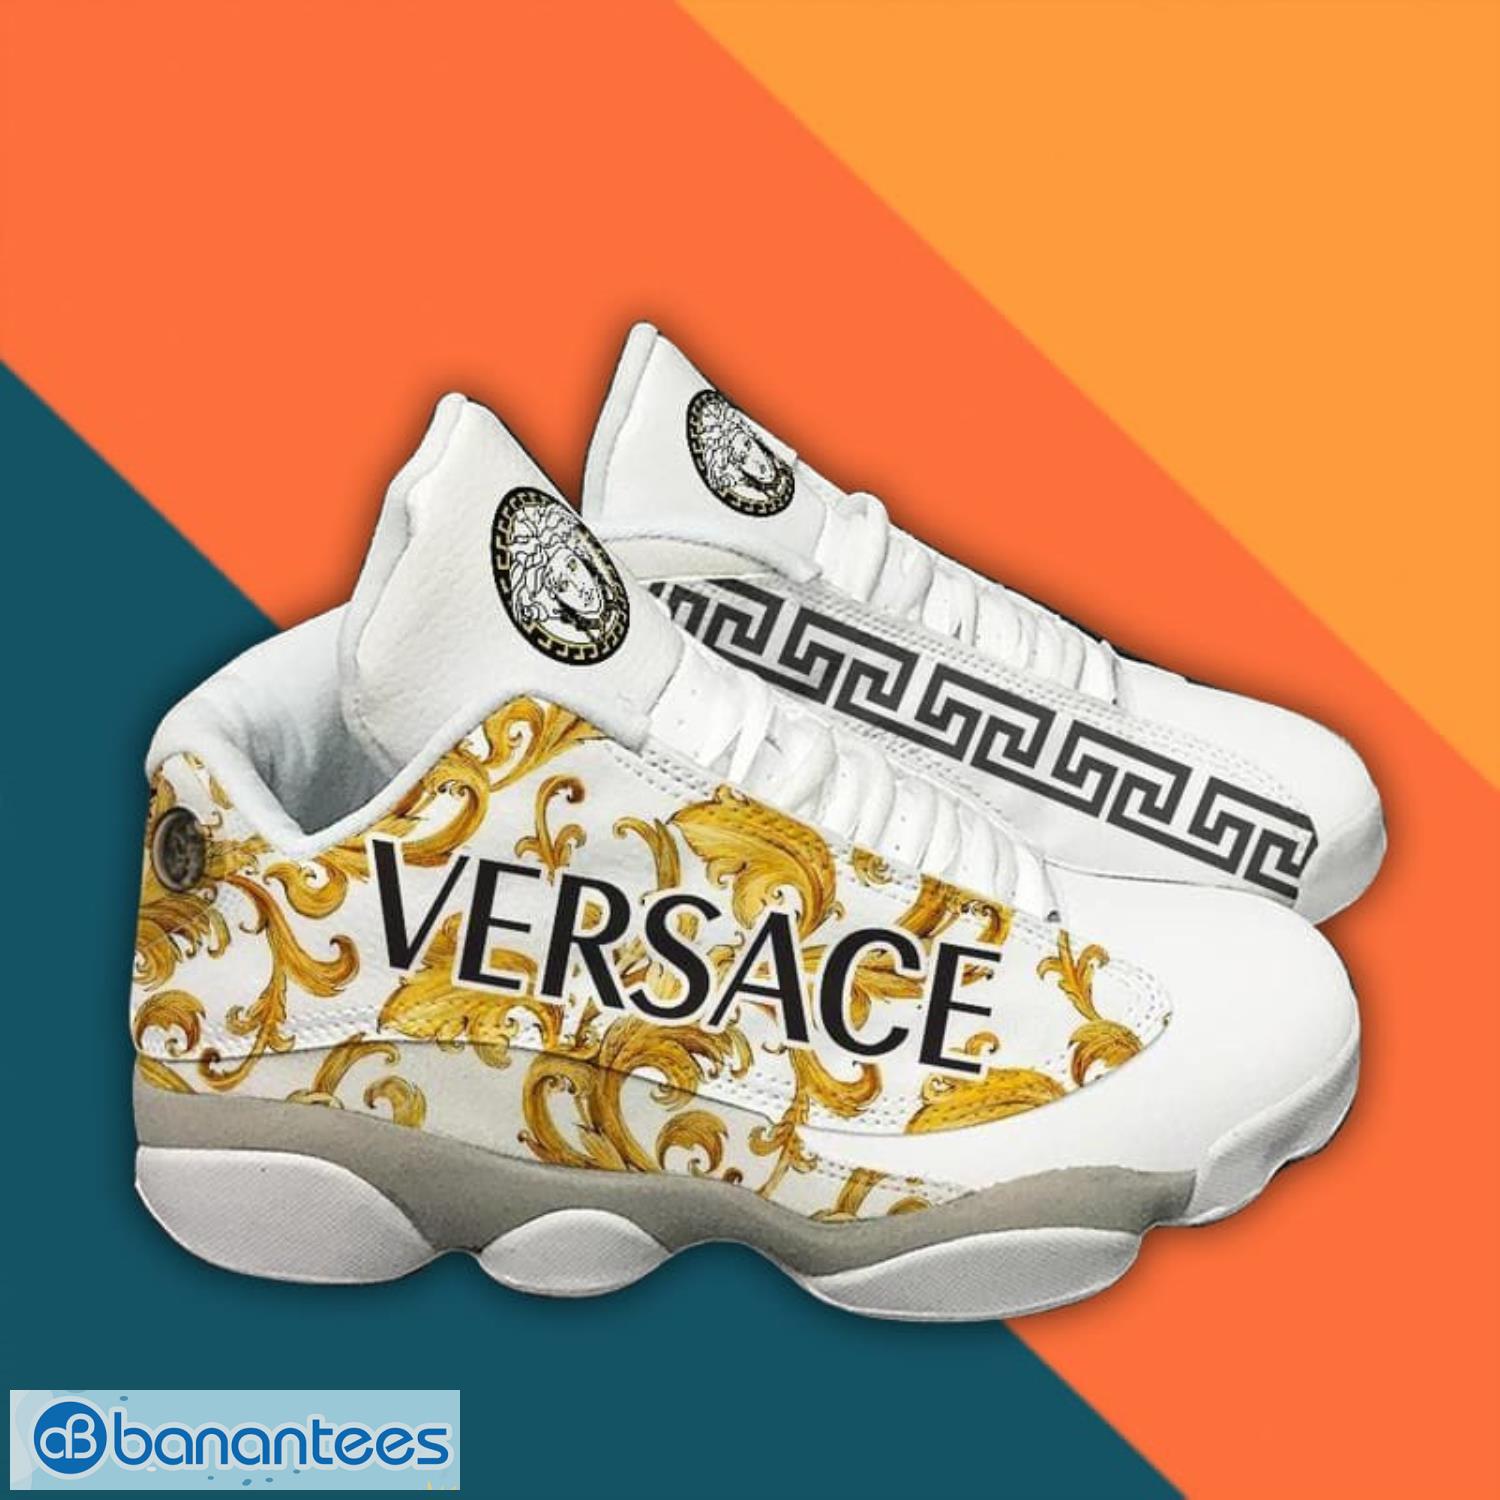 Versace White Air Jordan 13 Sneaker Product Photo 1